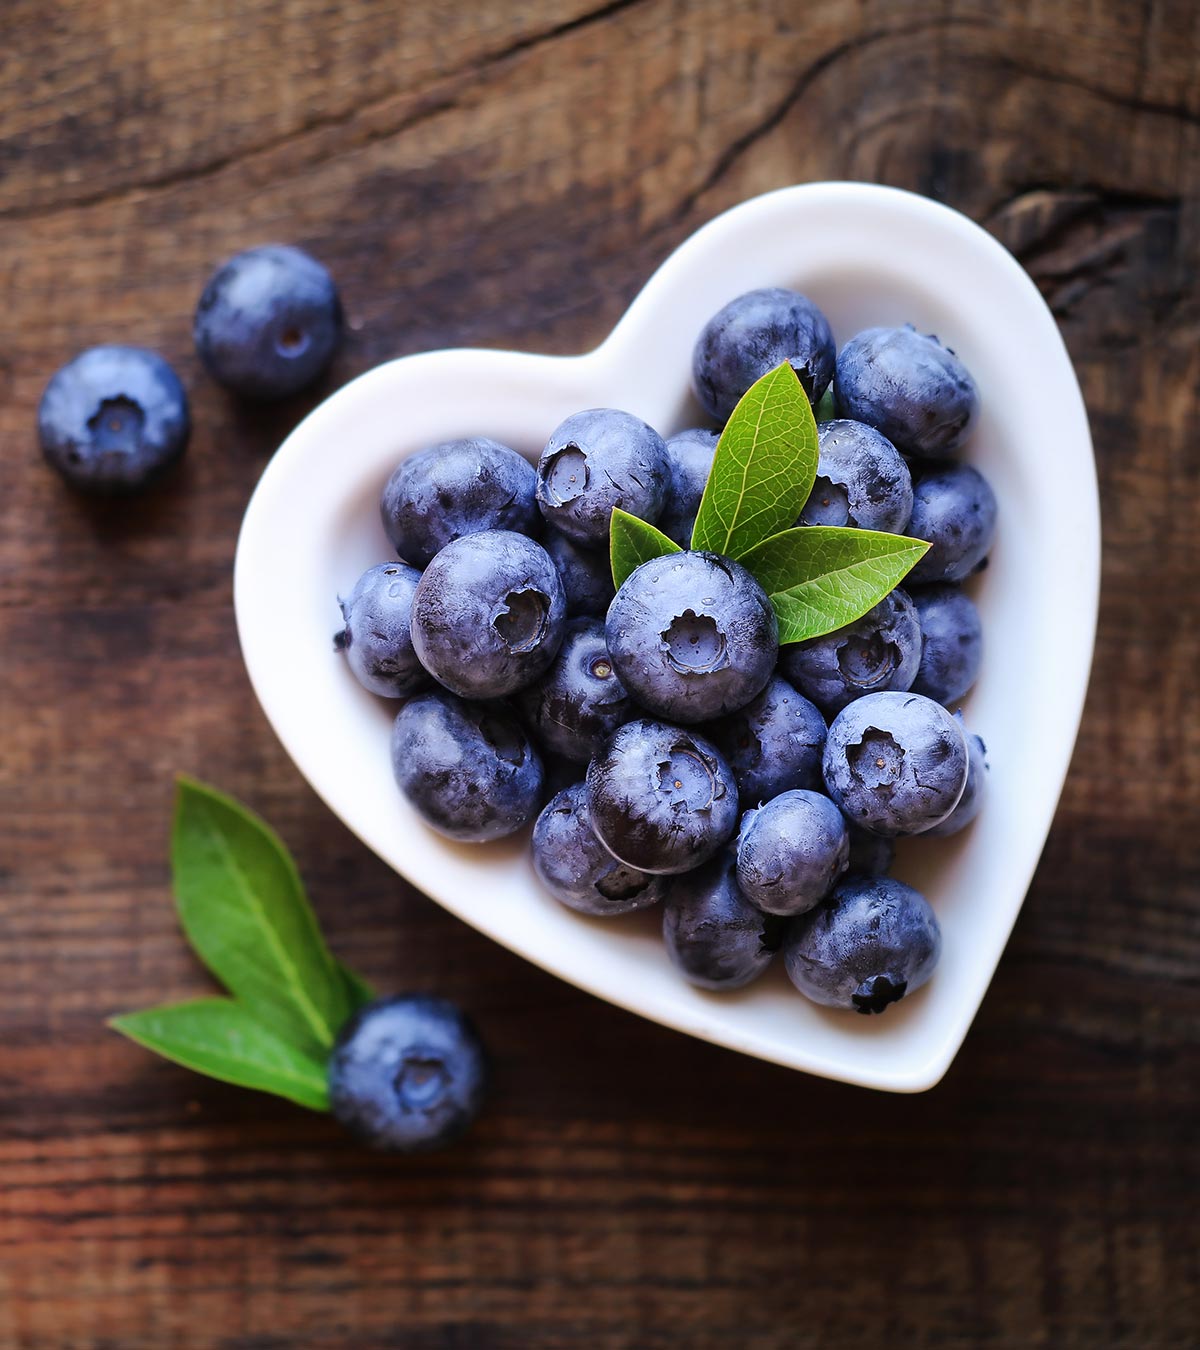 8 Delightful Health Benefits Of Blueberries For Babies